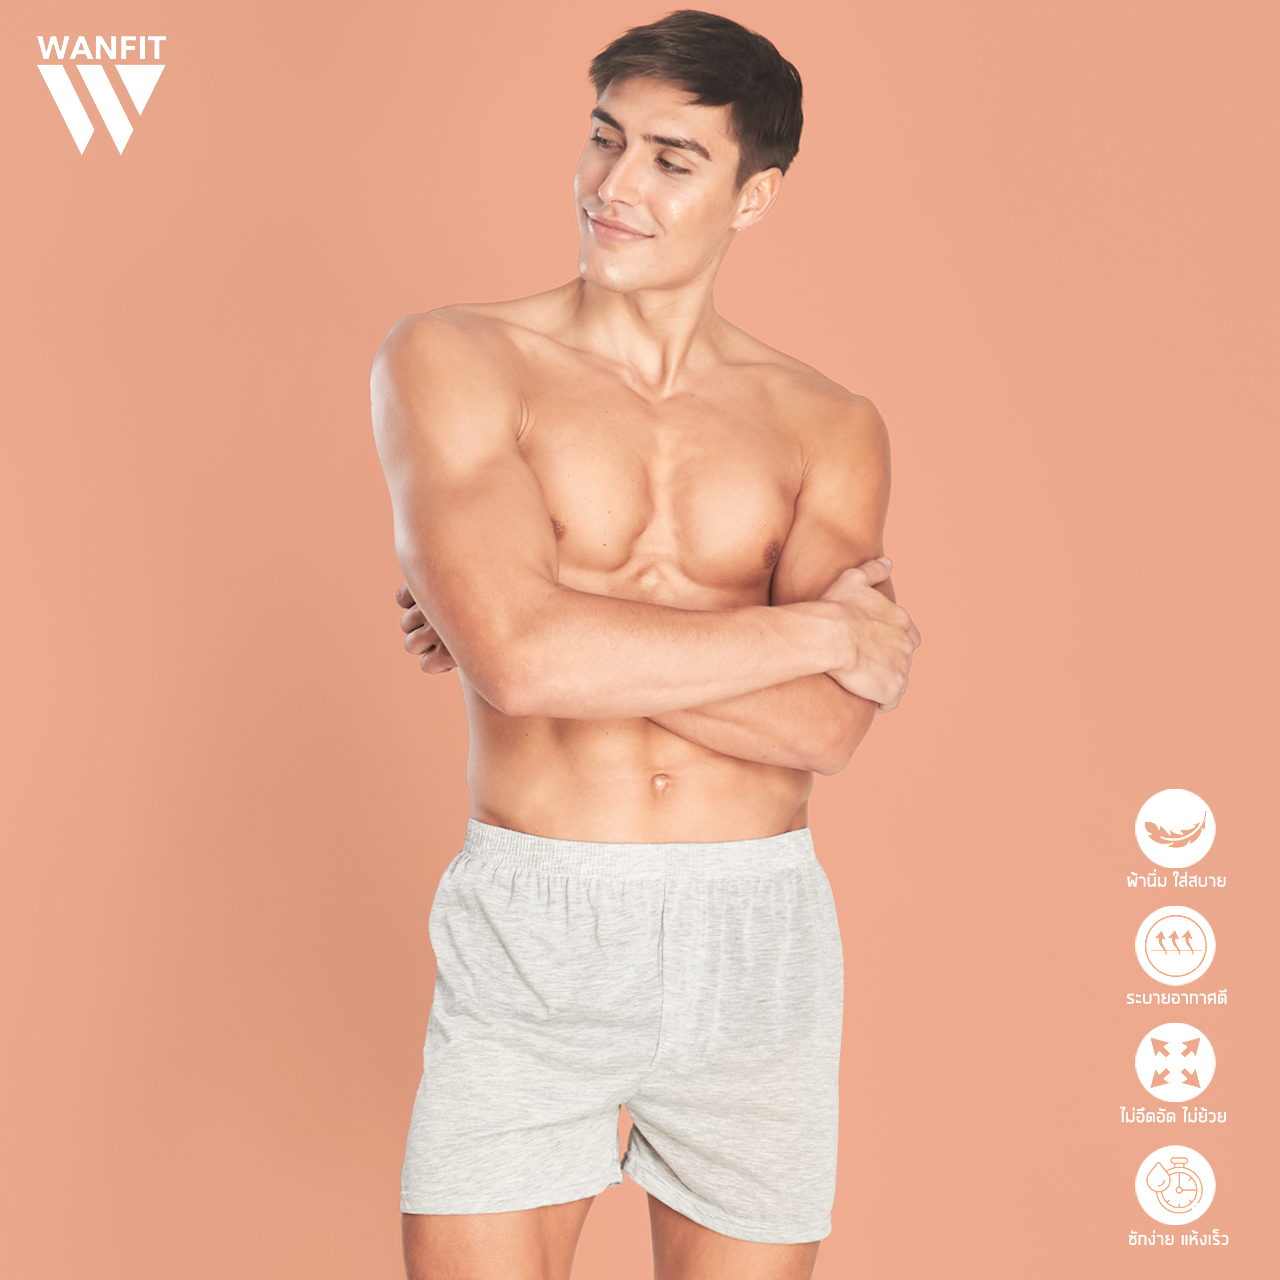 WANFIT กางเกงบ๊อกเซอร์ Boxer สีพื้น ผ้านิ่ม ใส่สบาย ไม่หด ไม่ย้วย ซักง่ายแห้งไว ระบายความร้อนได้ดี